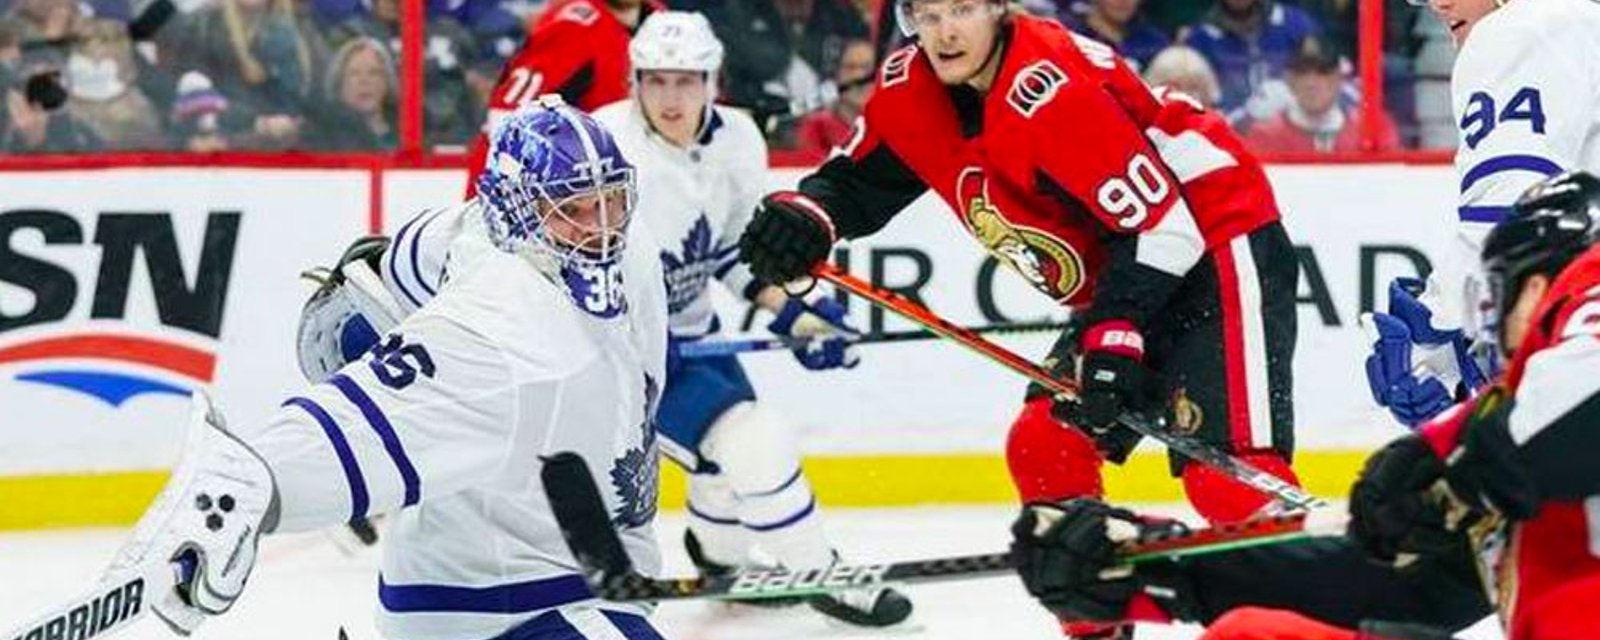 Trade brewing between Leafs and Senators 